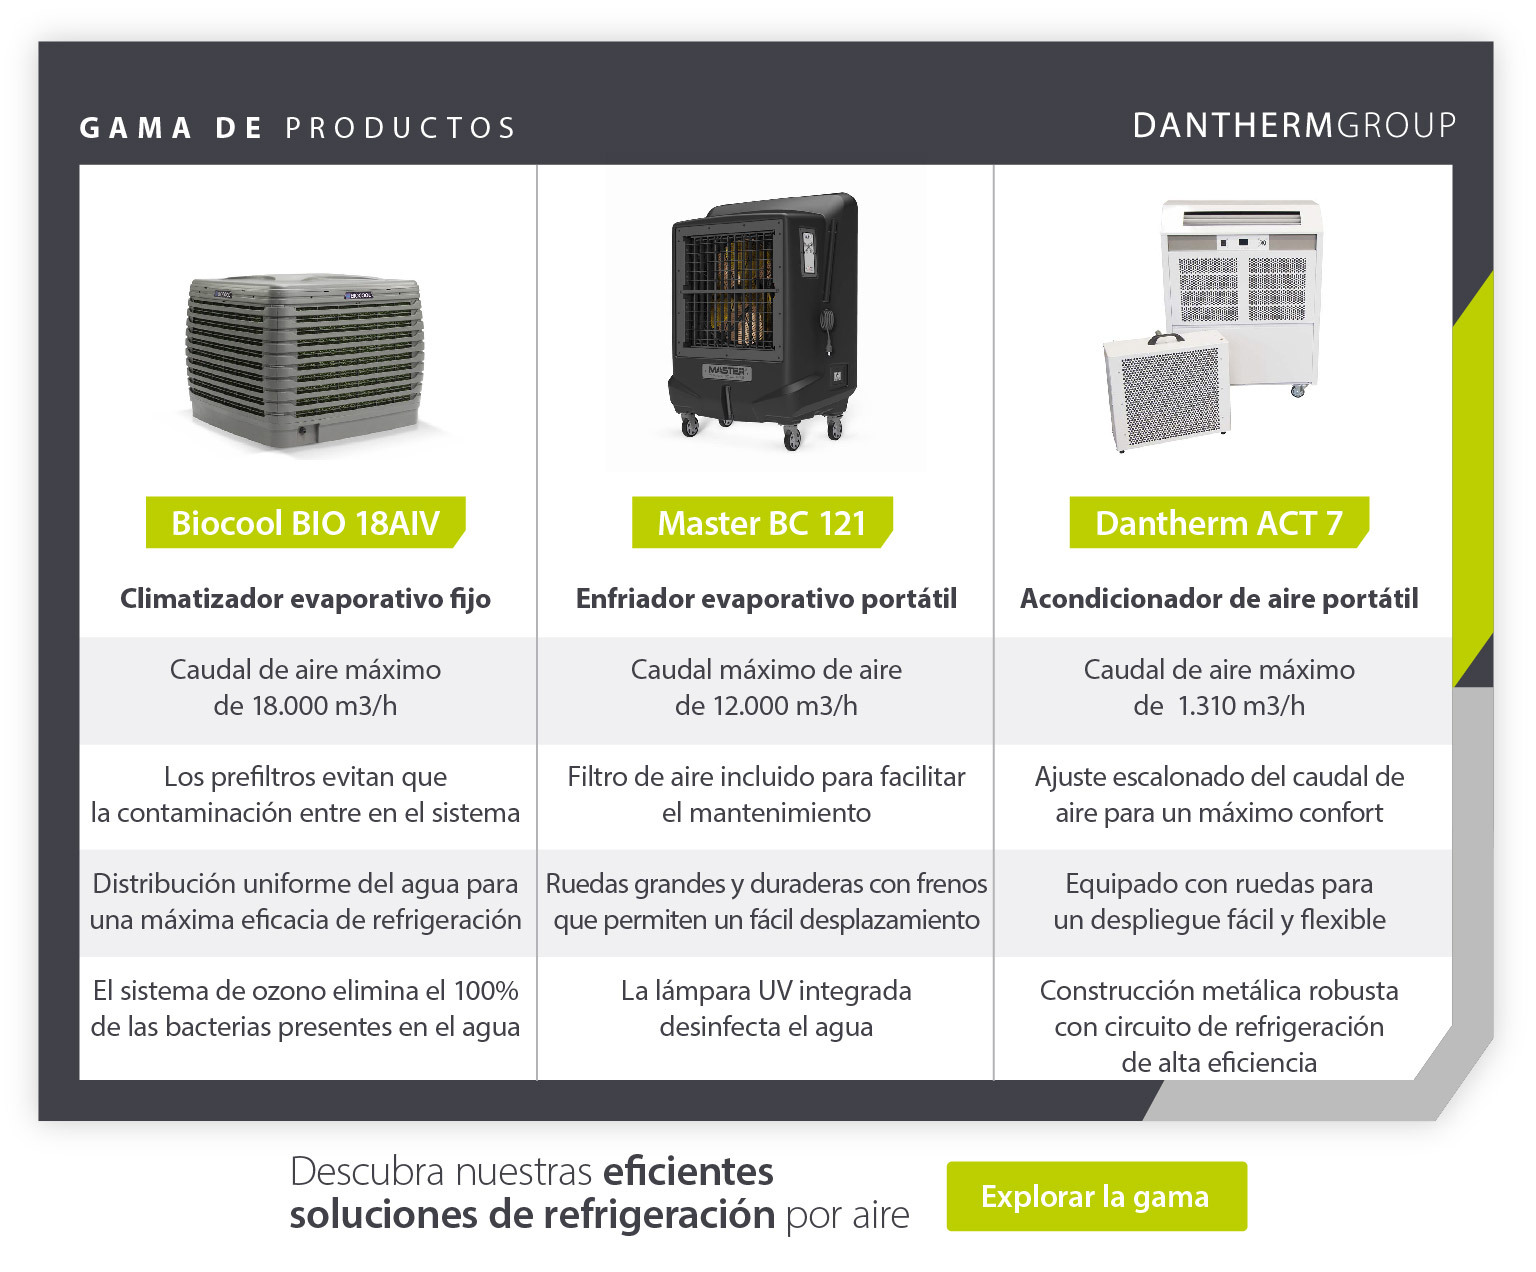 Exposición de productos que compara 3 modelos de climatizadores evaporativos comerciales